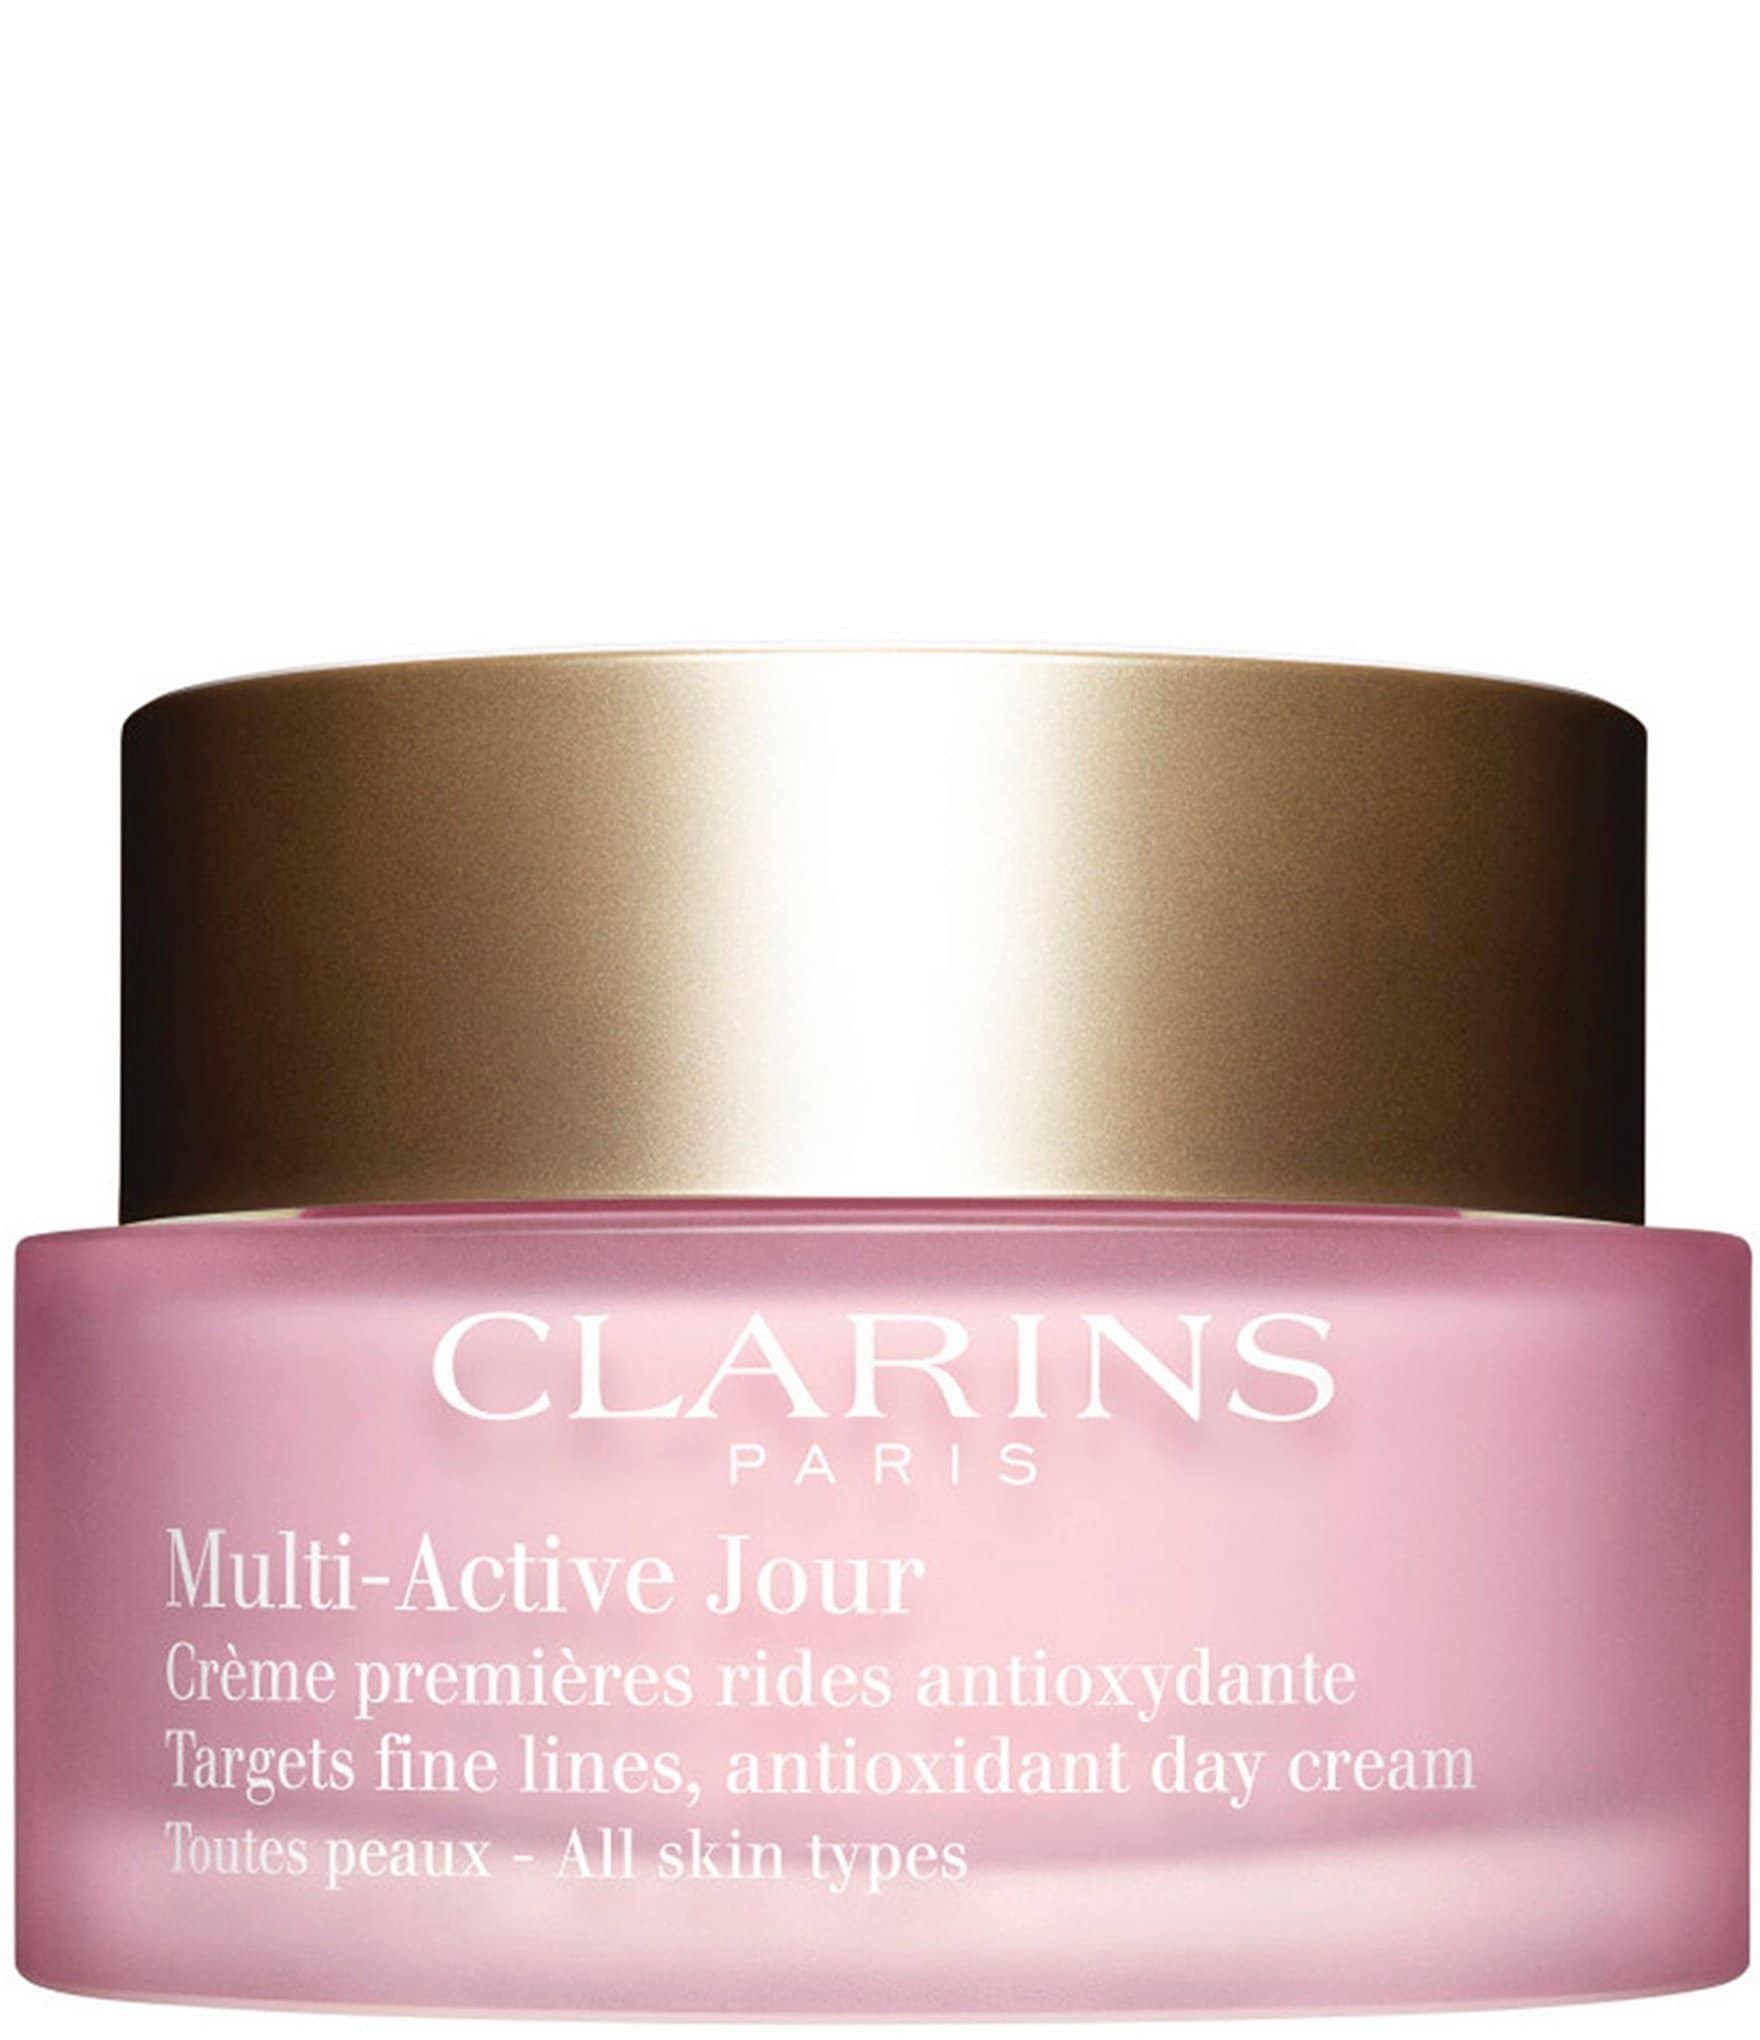 Clarins Multi-Active Day Cream - All Skin Types - 1.6 oz.